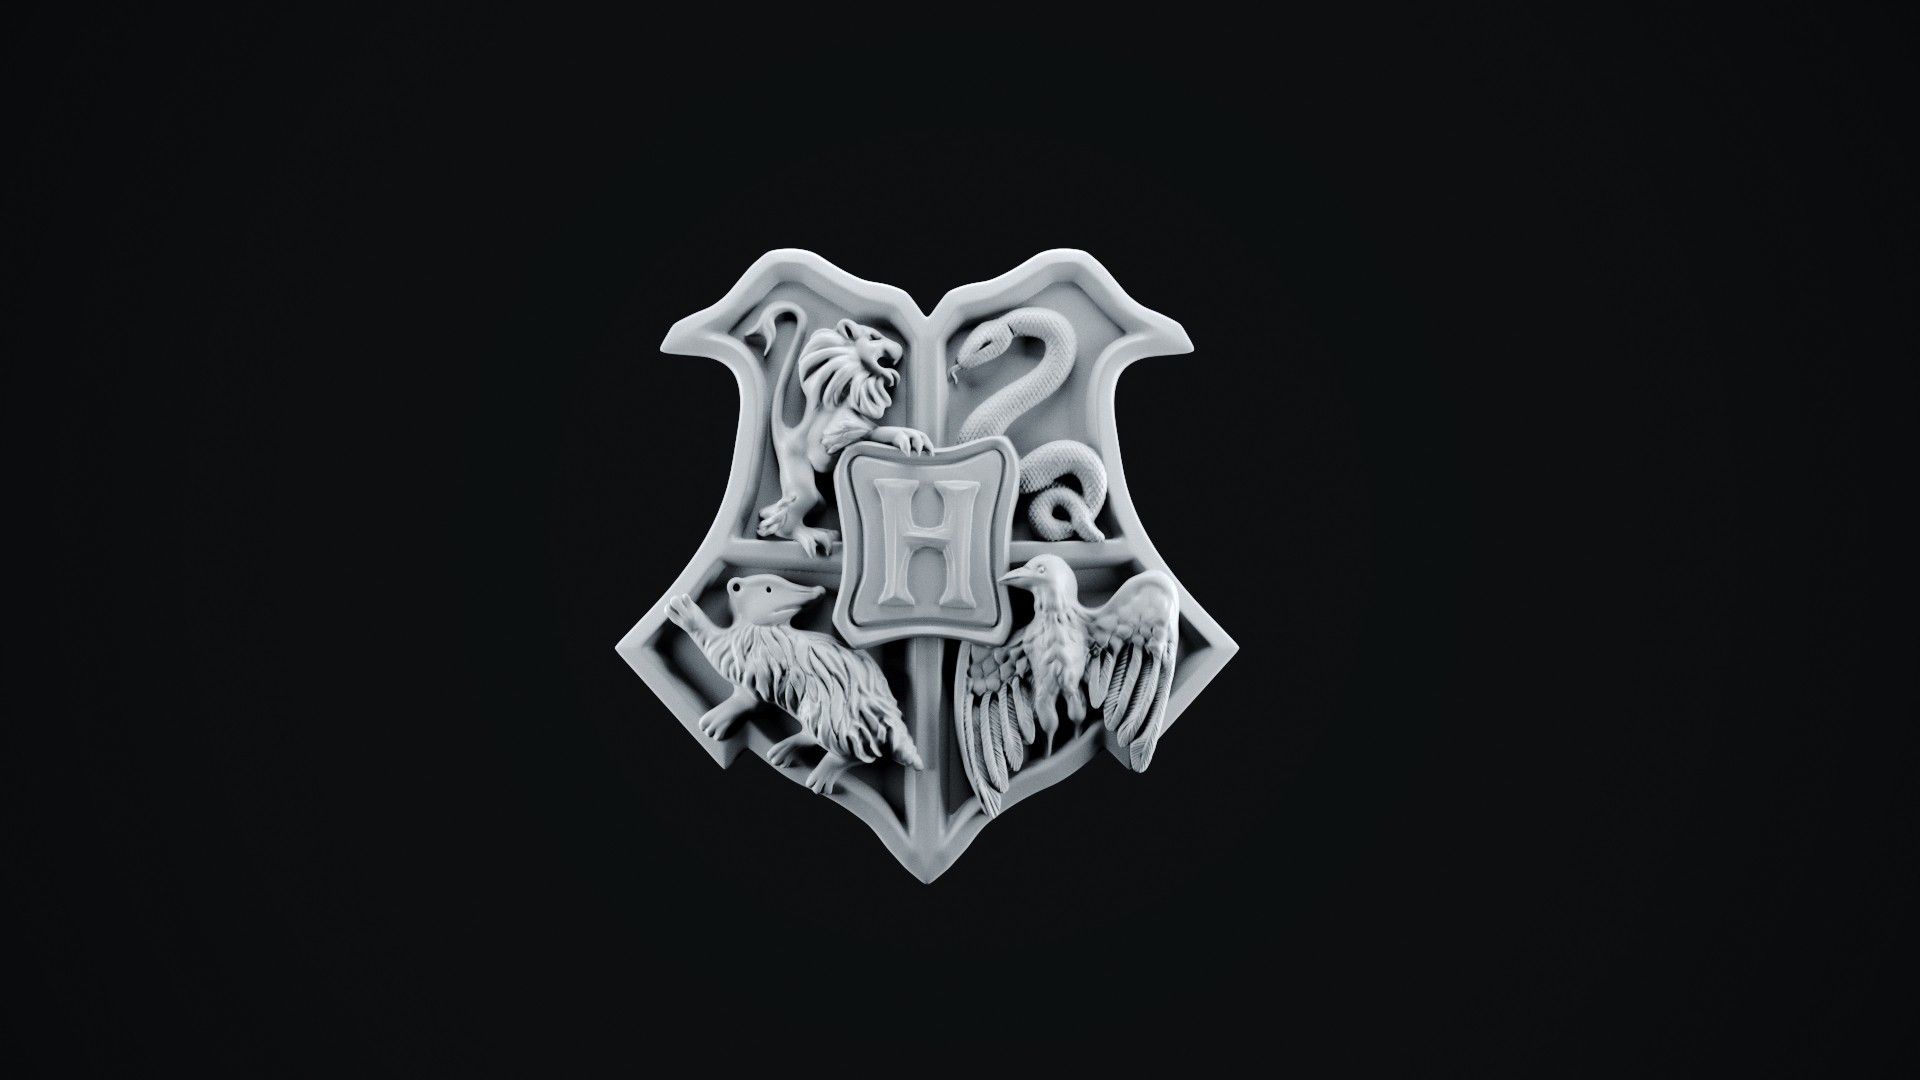 Harry Potter Hogwarts Logo Desktop Wallpapers On Wallpaperdog